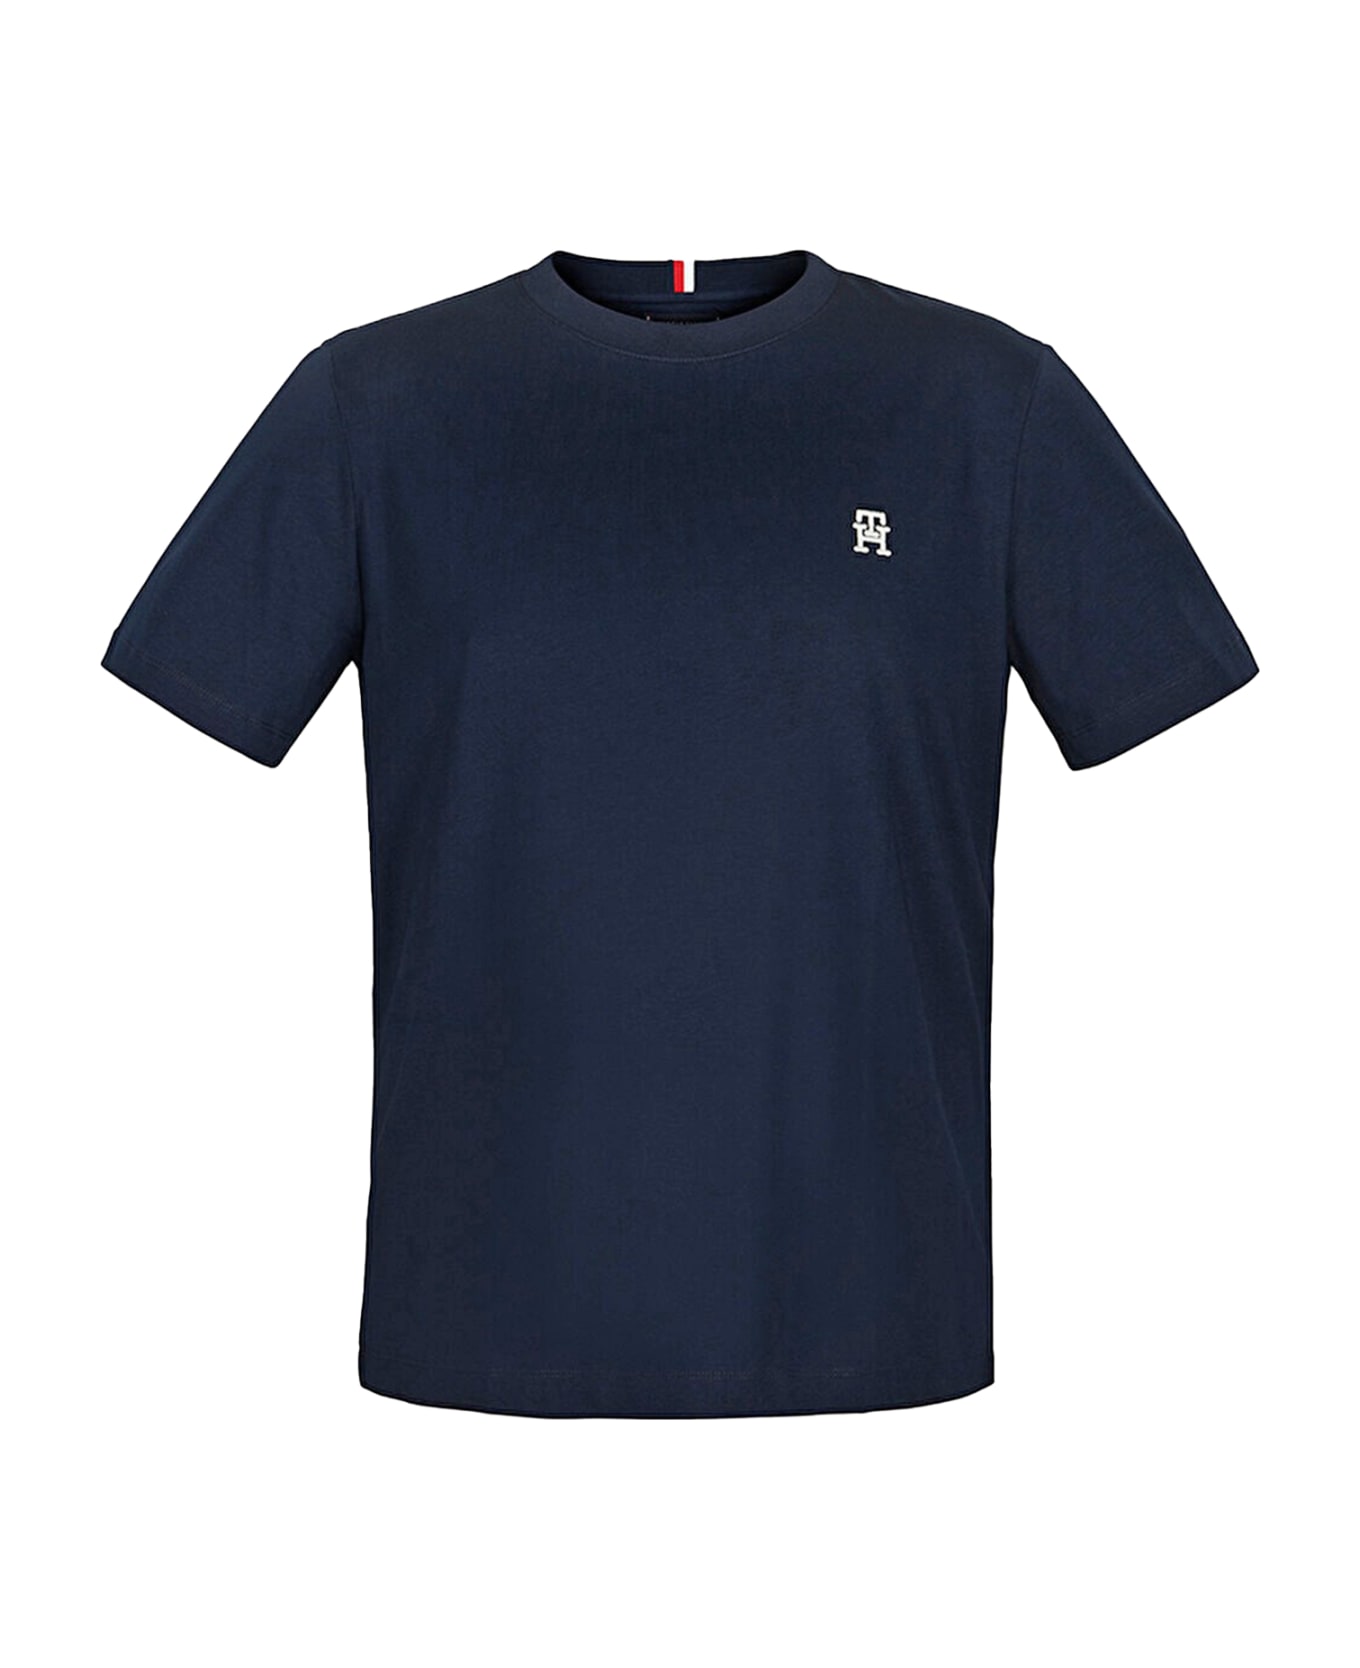 Tommy Hilfiger Navy Blue T-shirt With Logo - DESERT SKY